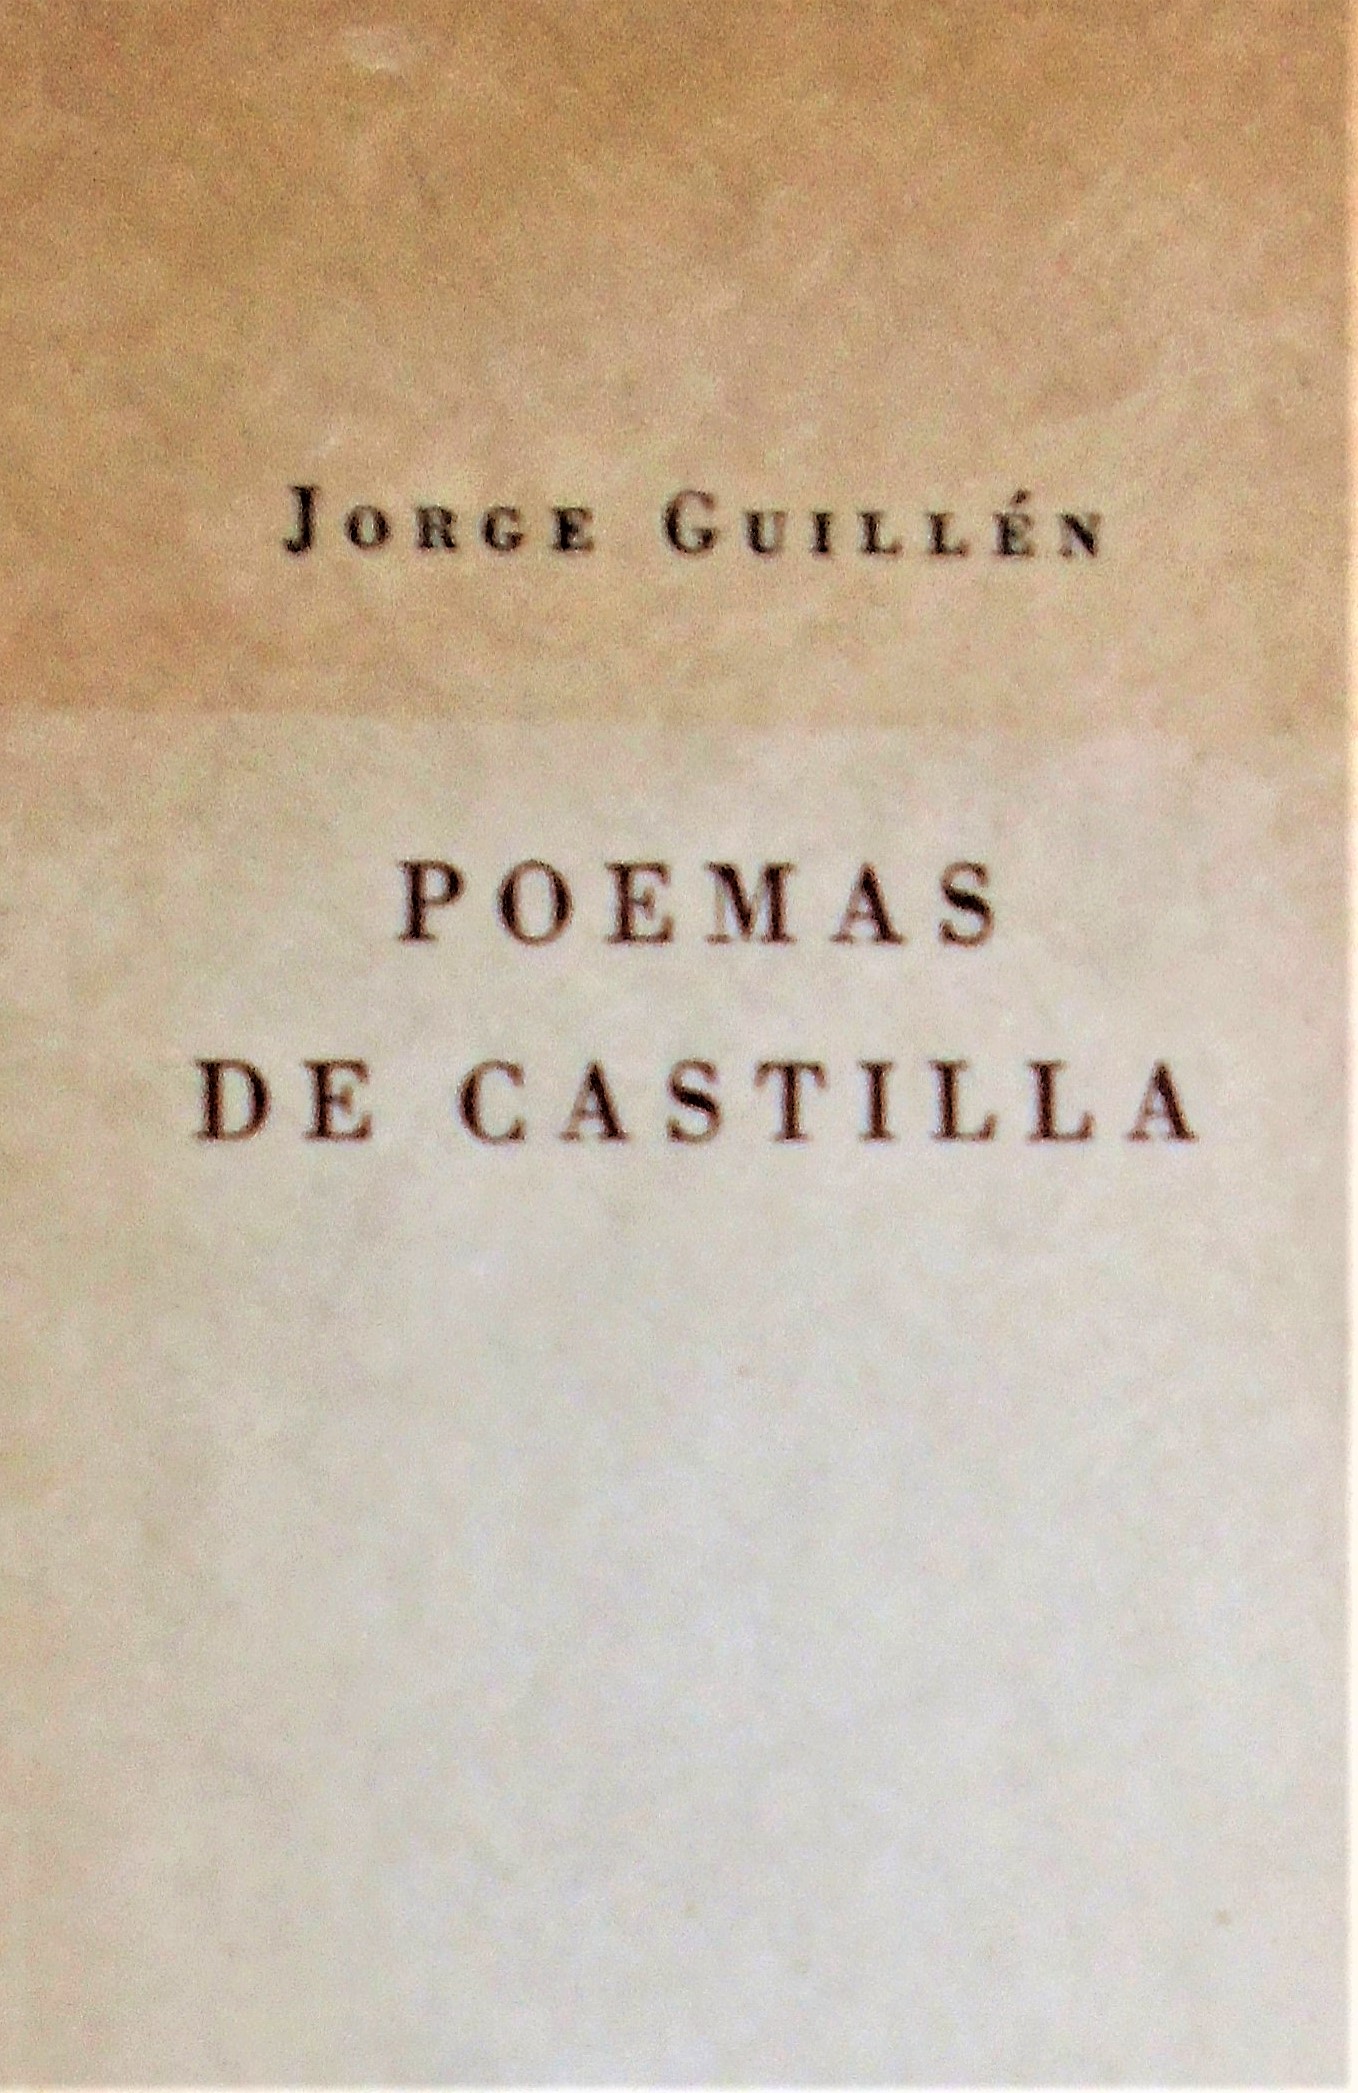 Jorge Guillén - Poemas de castilla